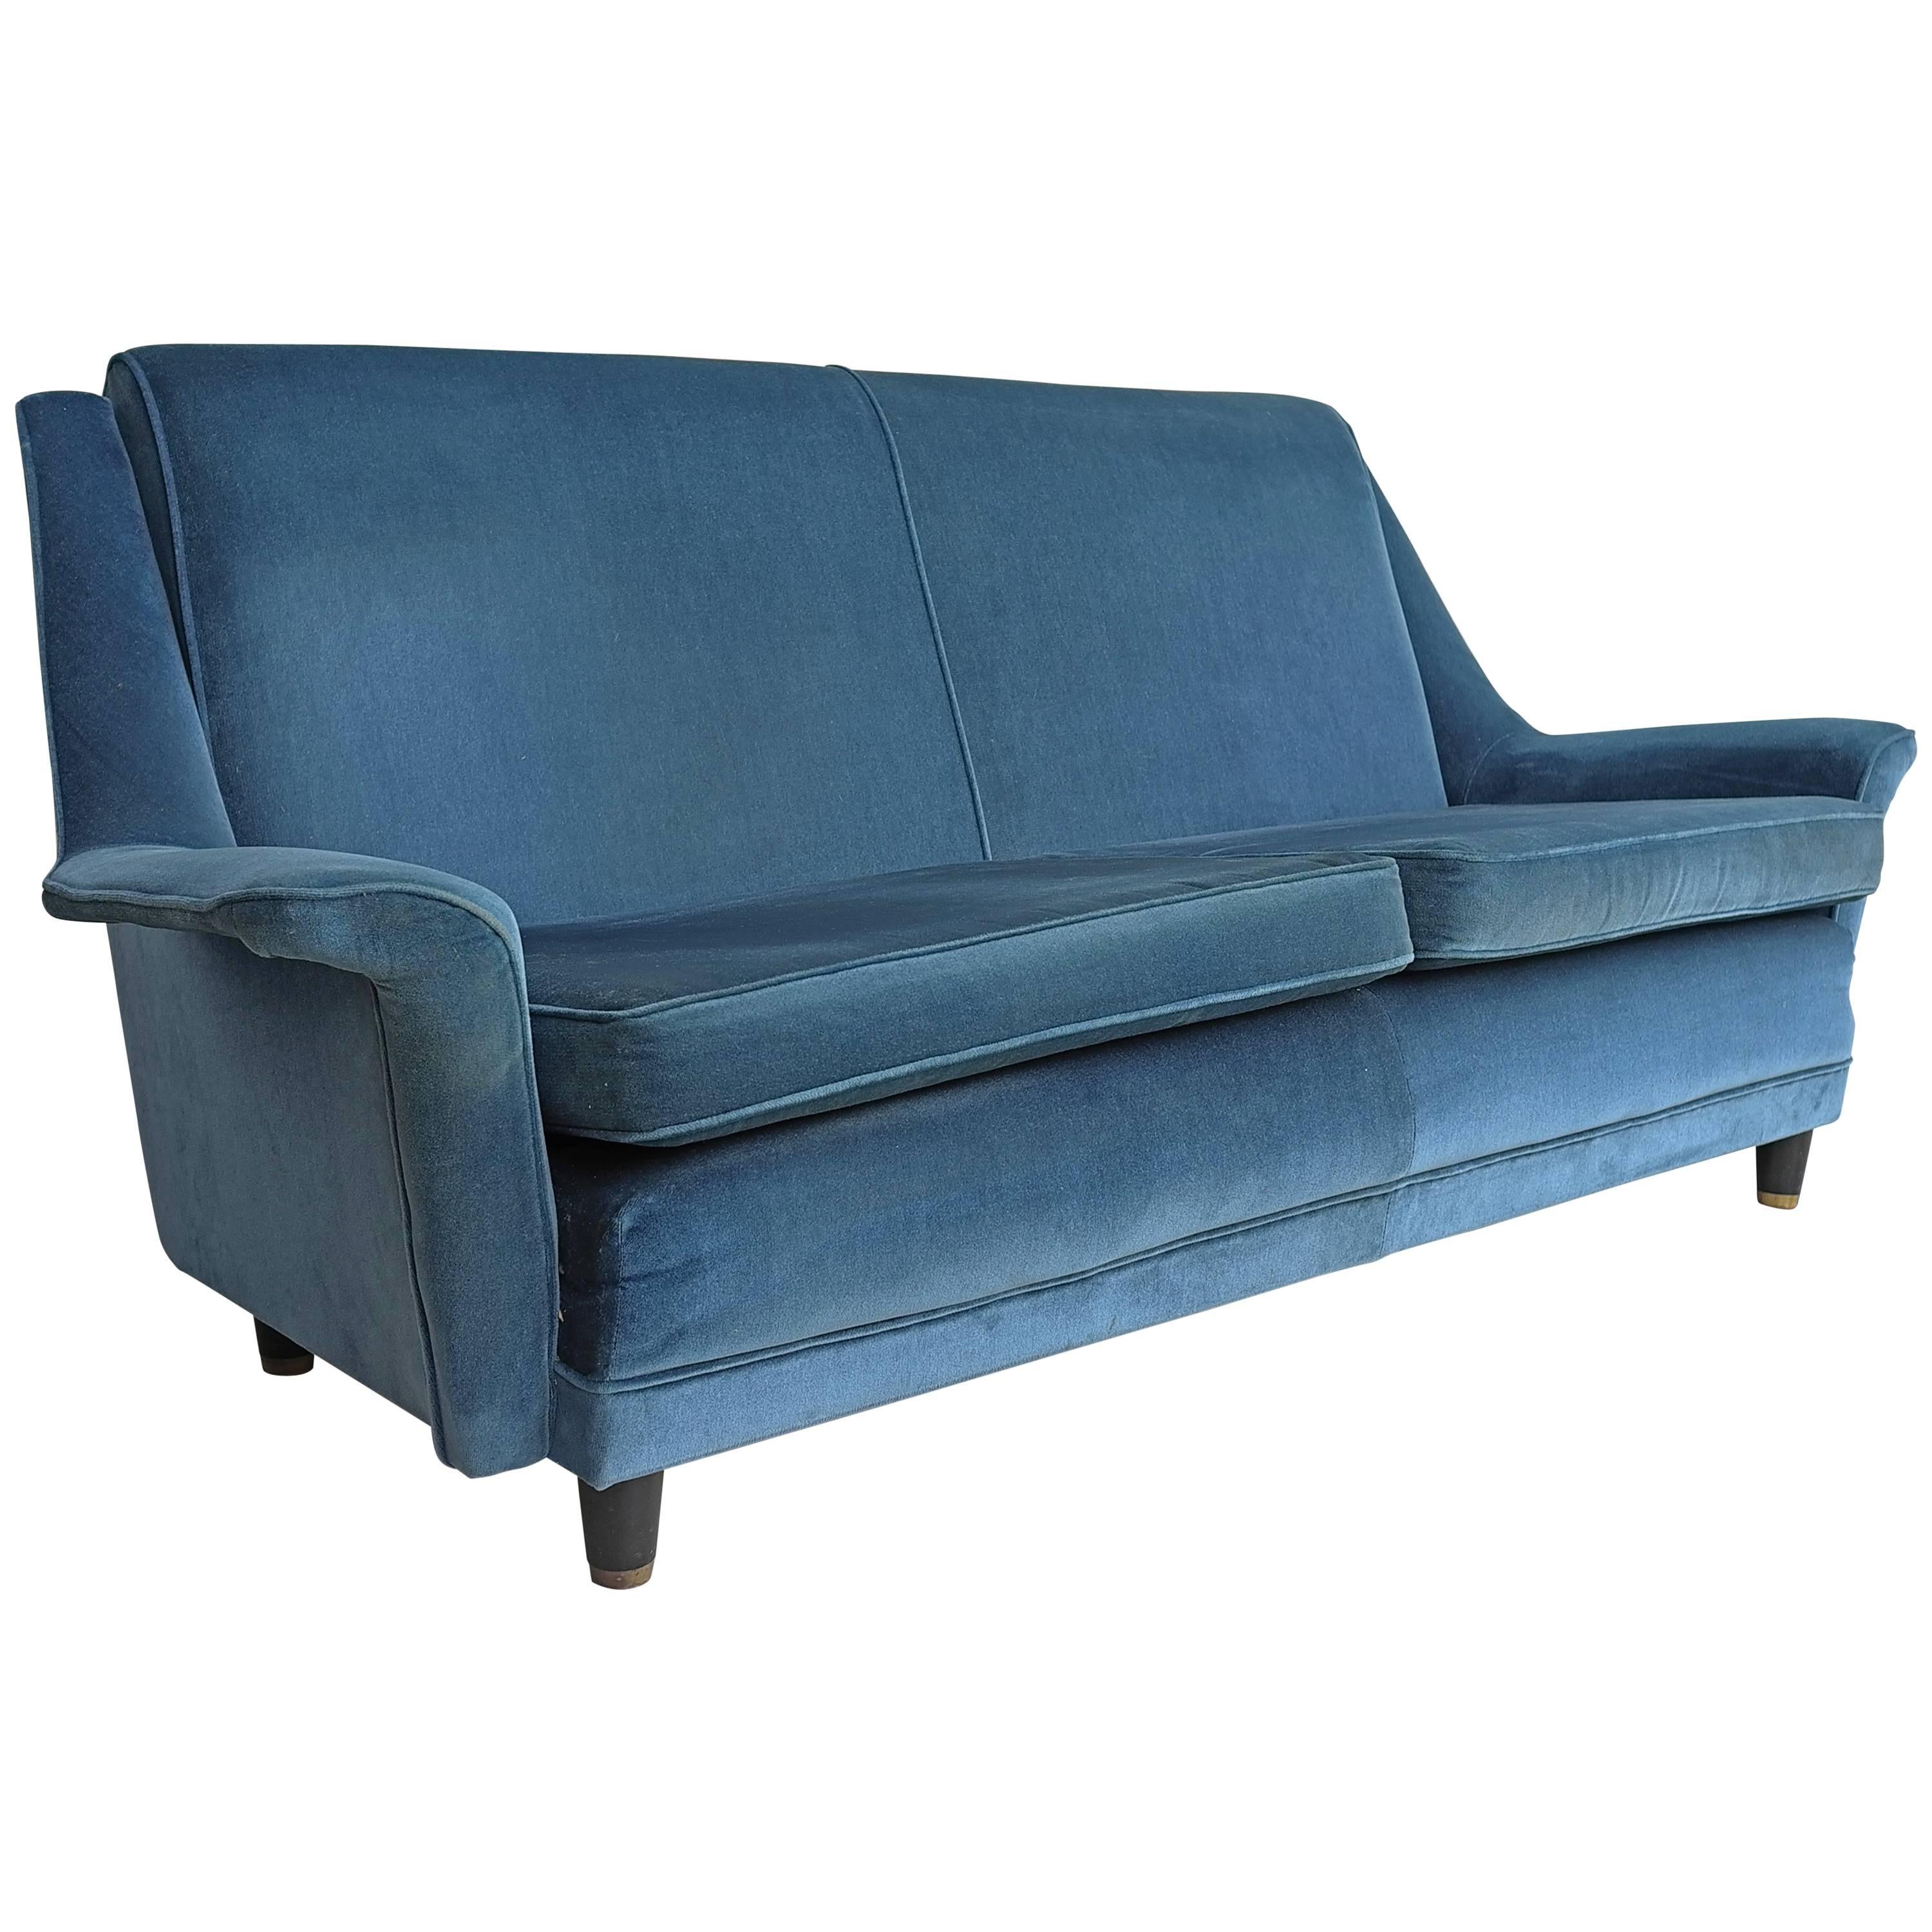 Two-Seat Sofa in Original Blue Velvet, Italy, 1950s